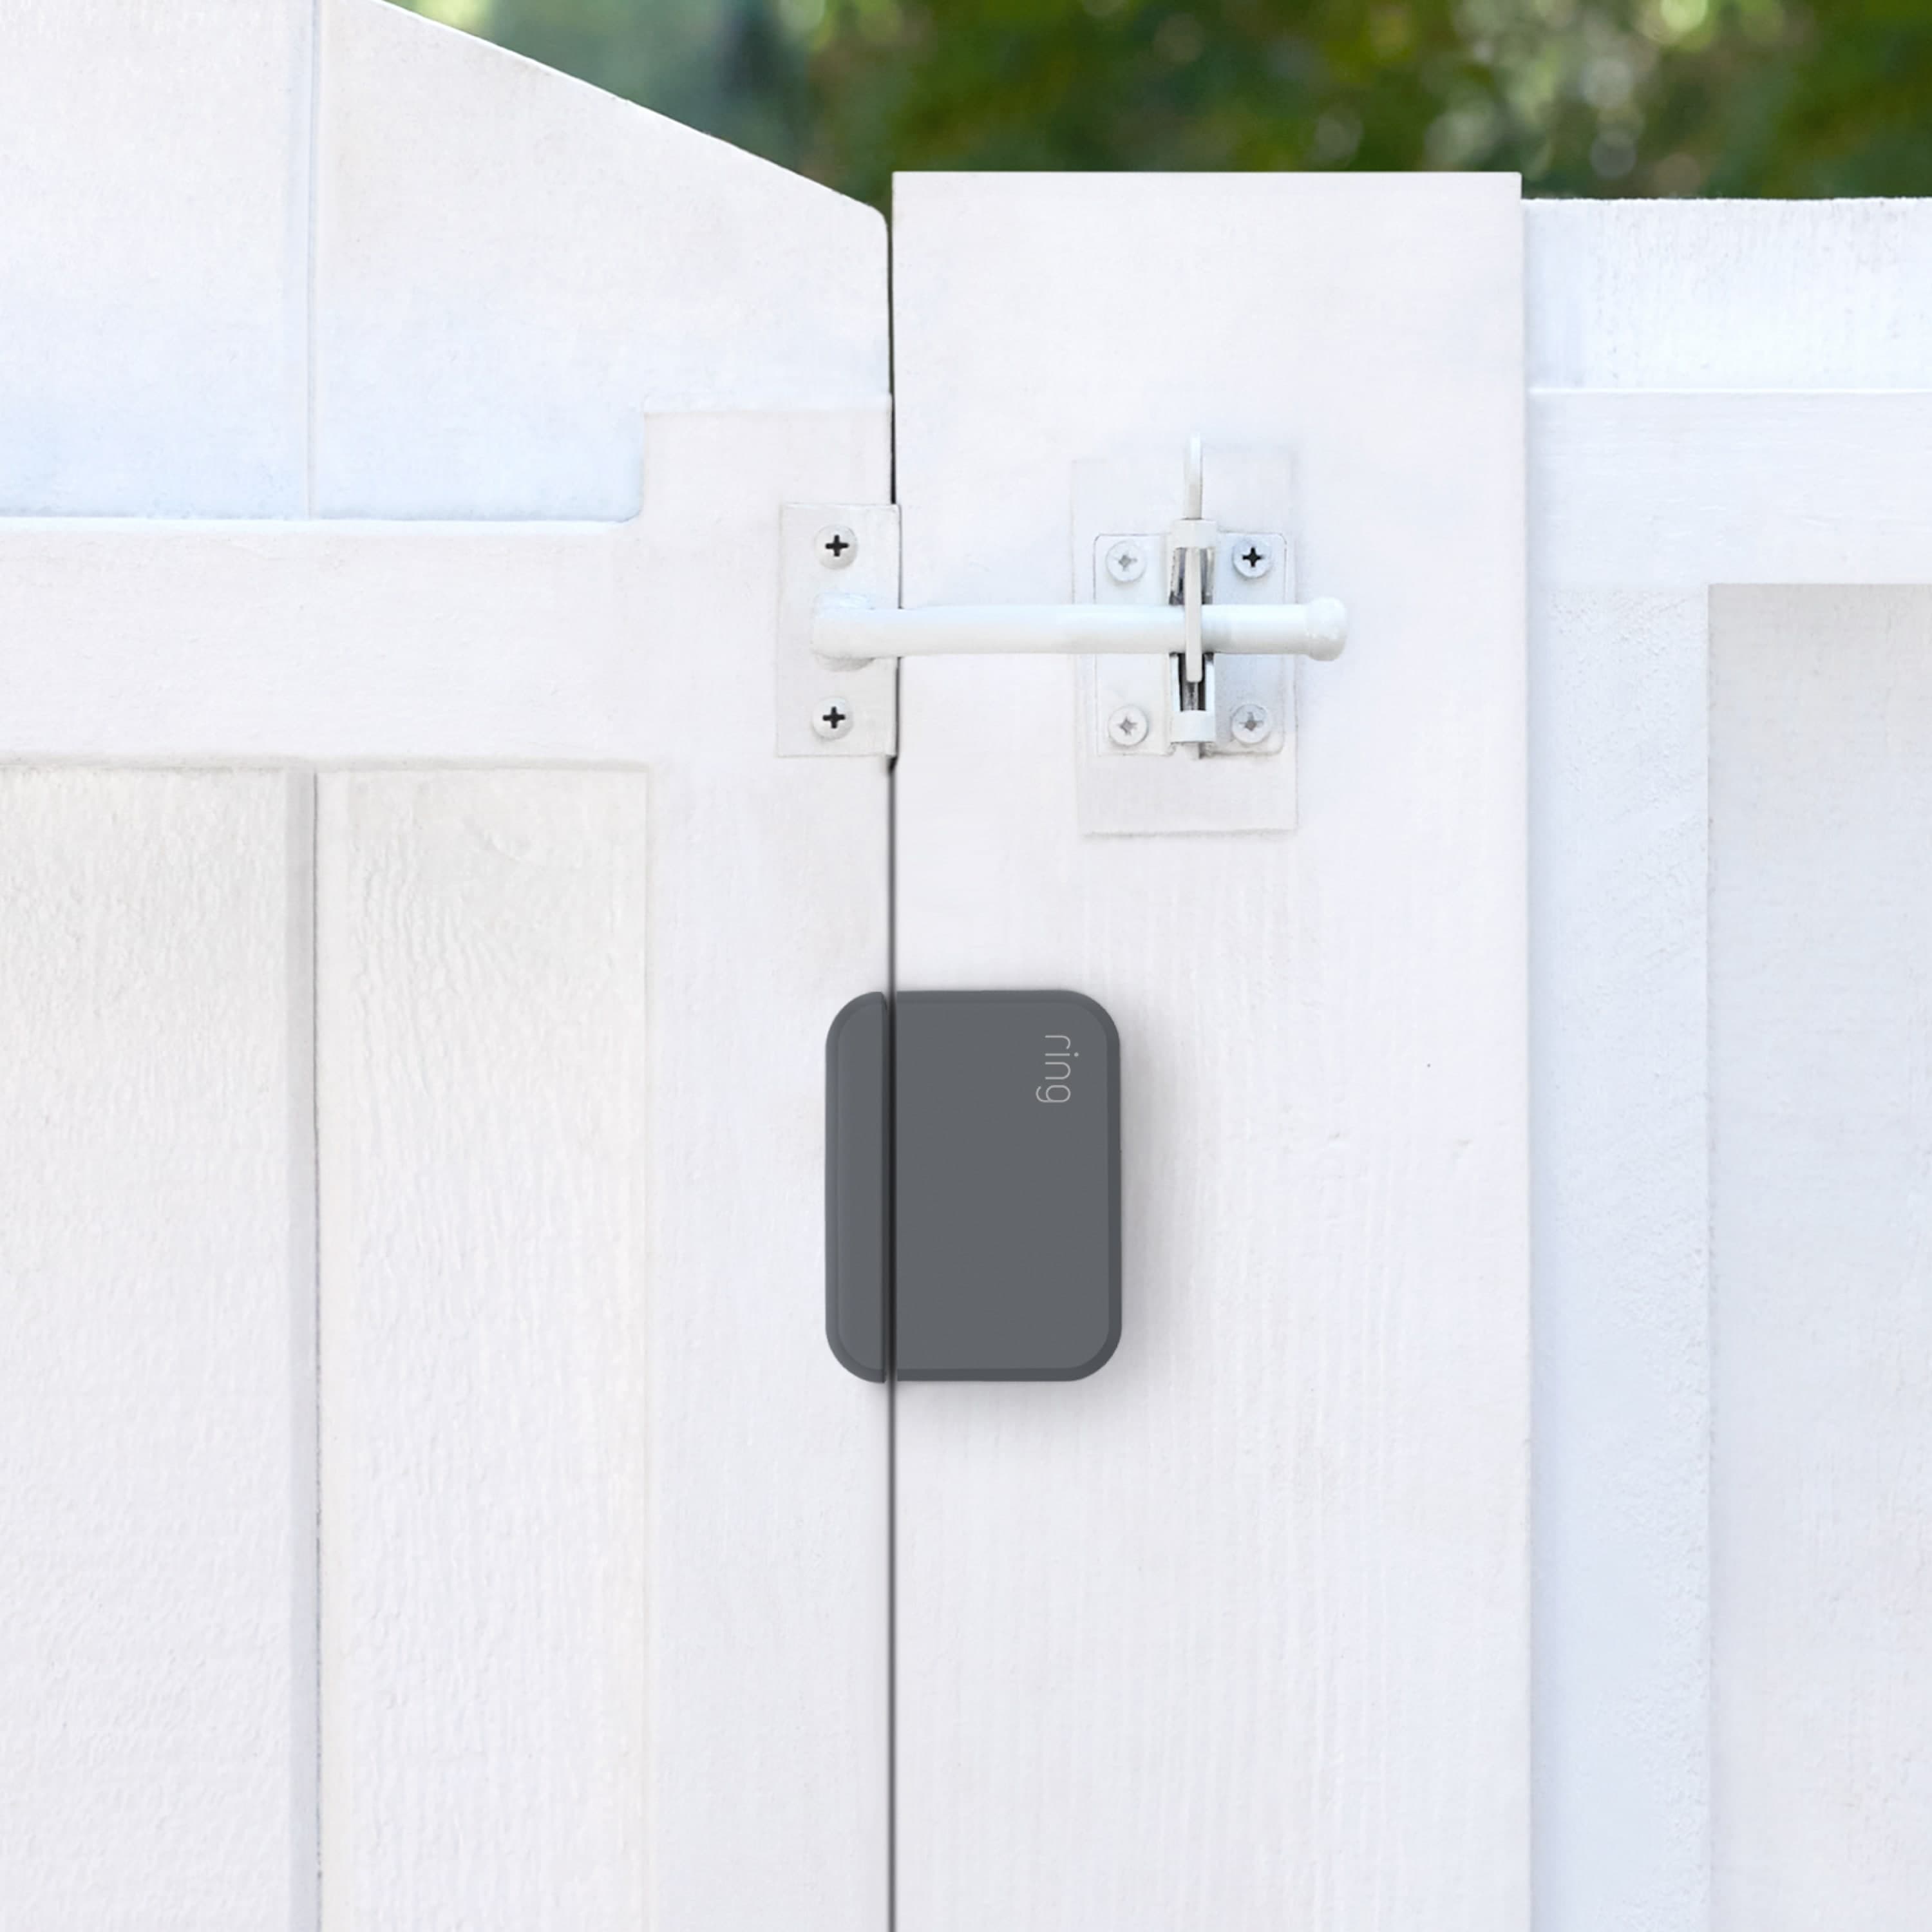 Ring Alarm Outdoor Contact Sensor - Ring Alarm Outdoor Contact Sensor